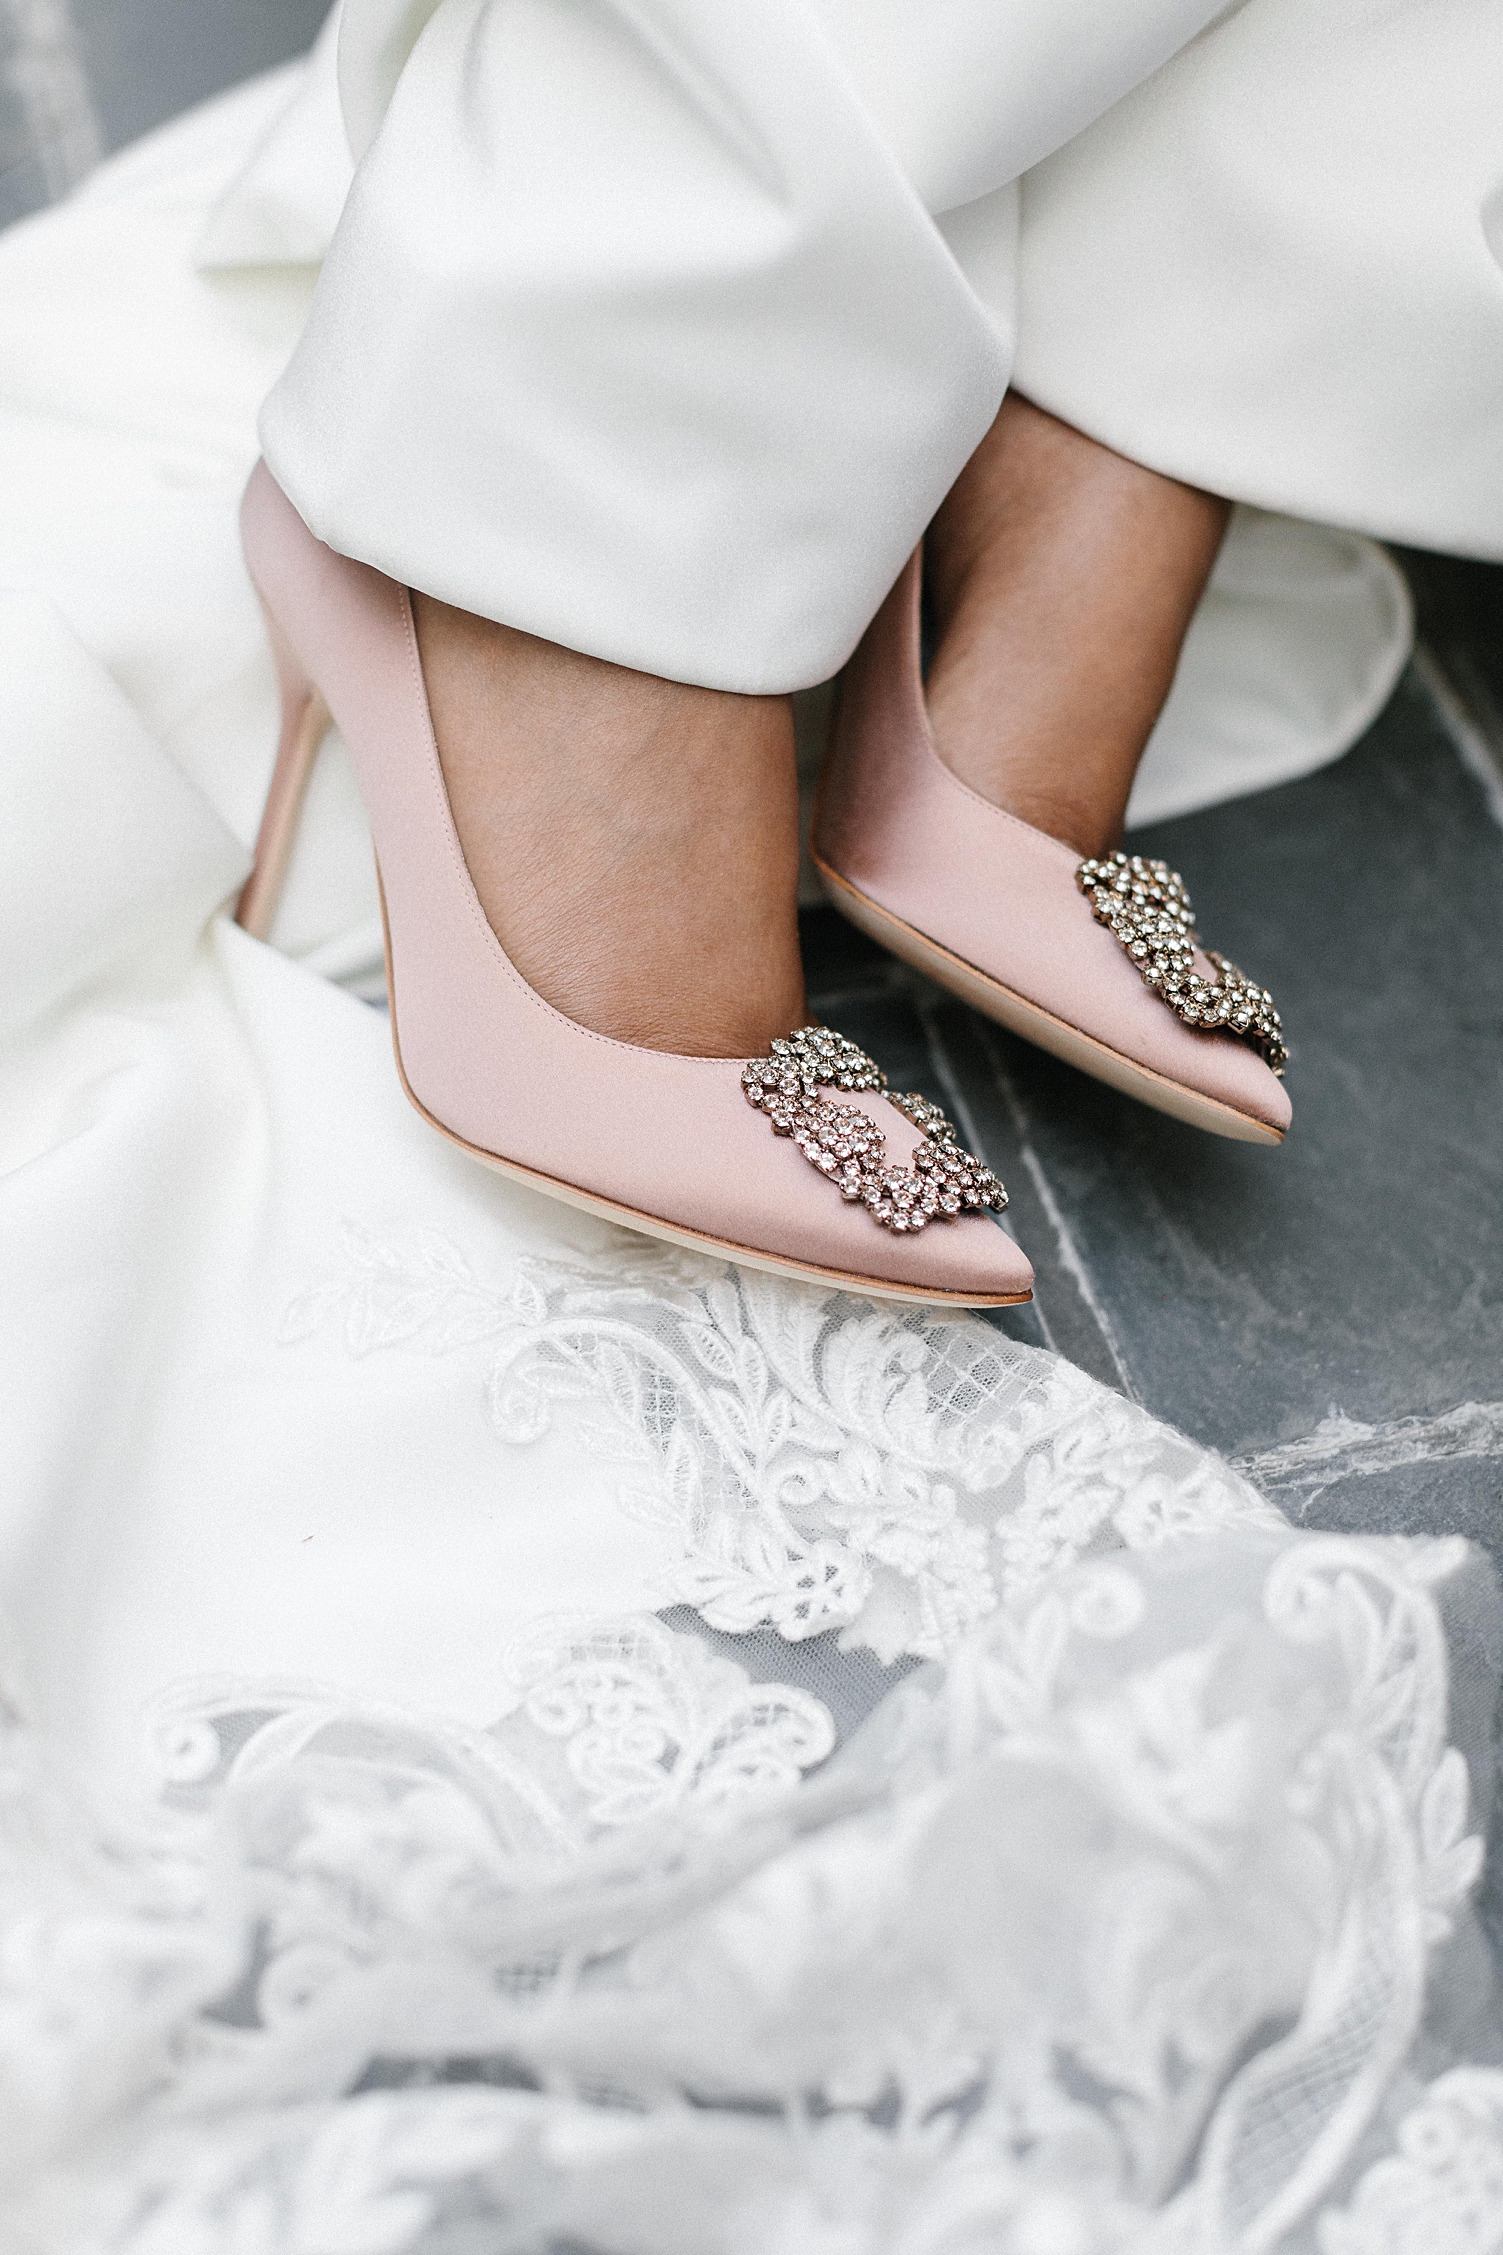 Pink high heels on brides feet